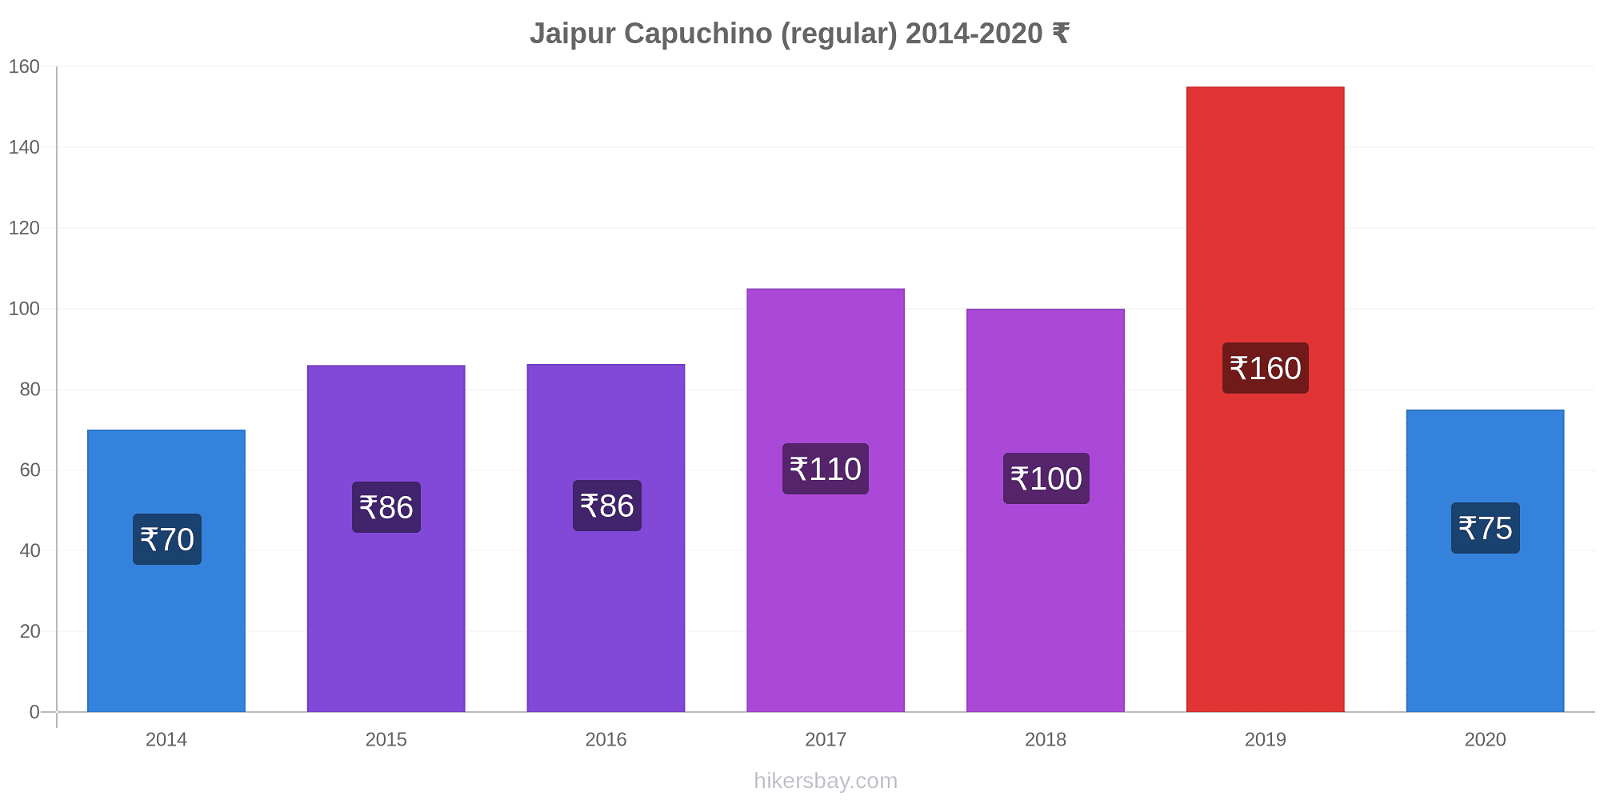 Jaipur cambios de precios Capuchino (regular) hikersbay.com